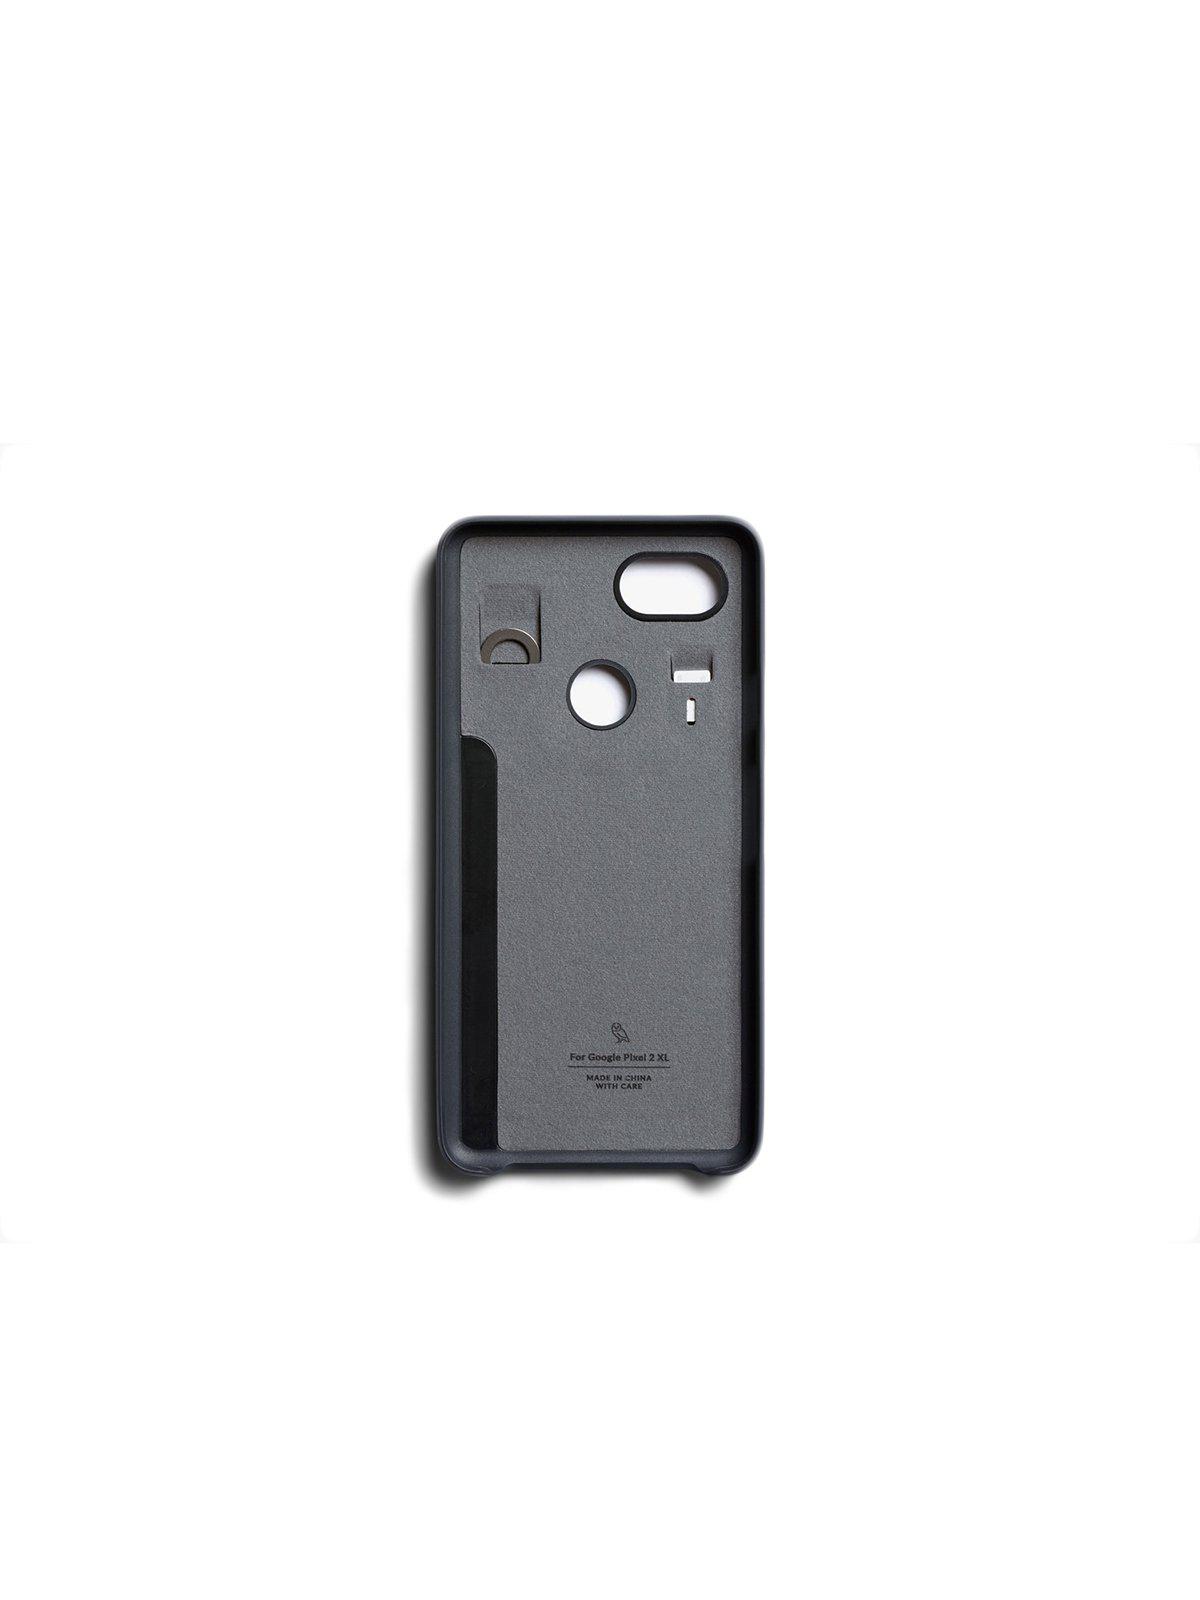 Bellroy Phone Case 3 Card Pixel 2XL Caramel - MORE by Morello Indonesia